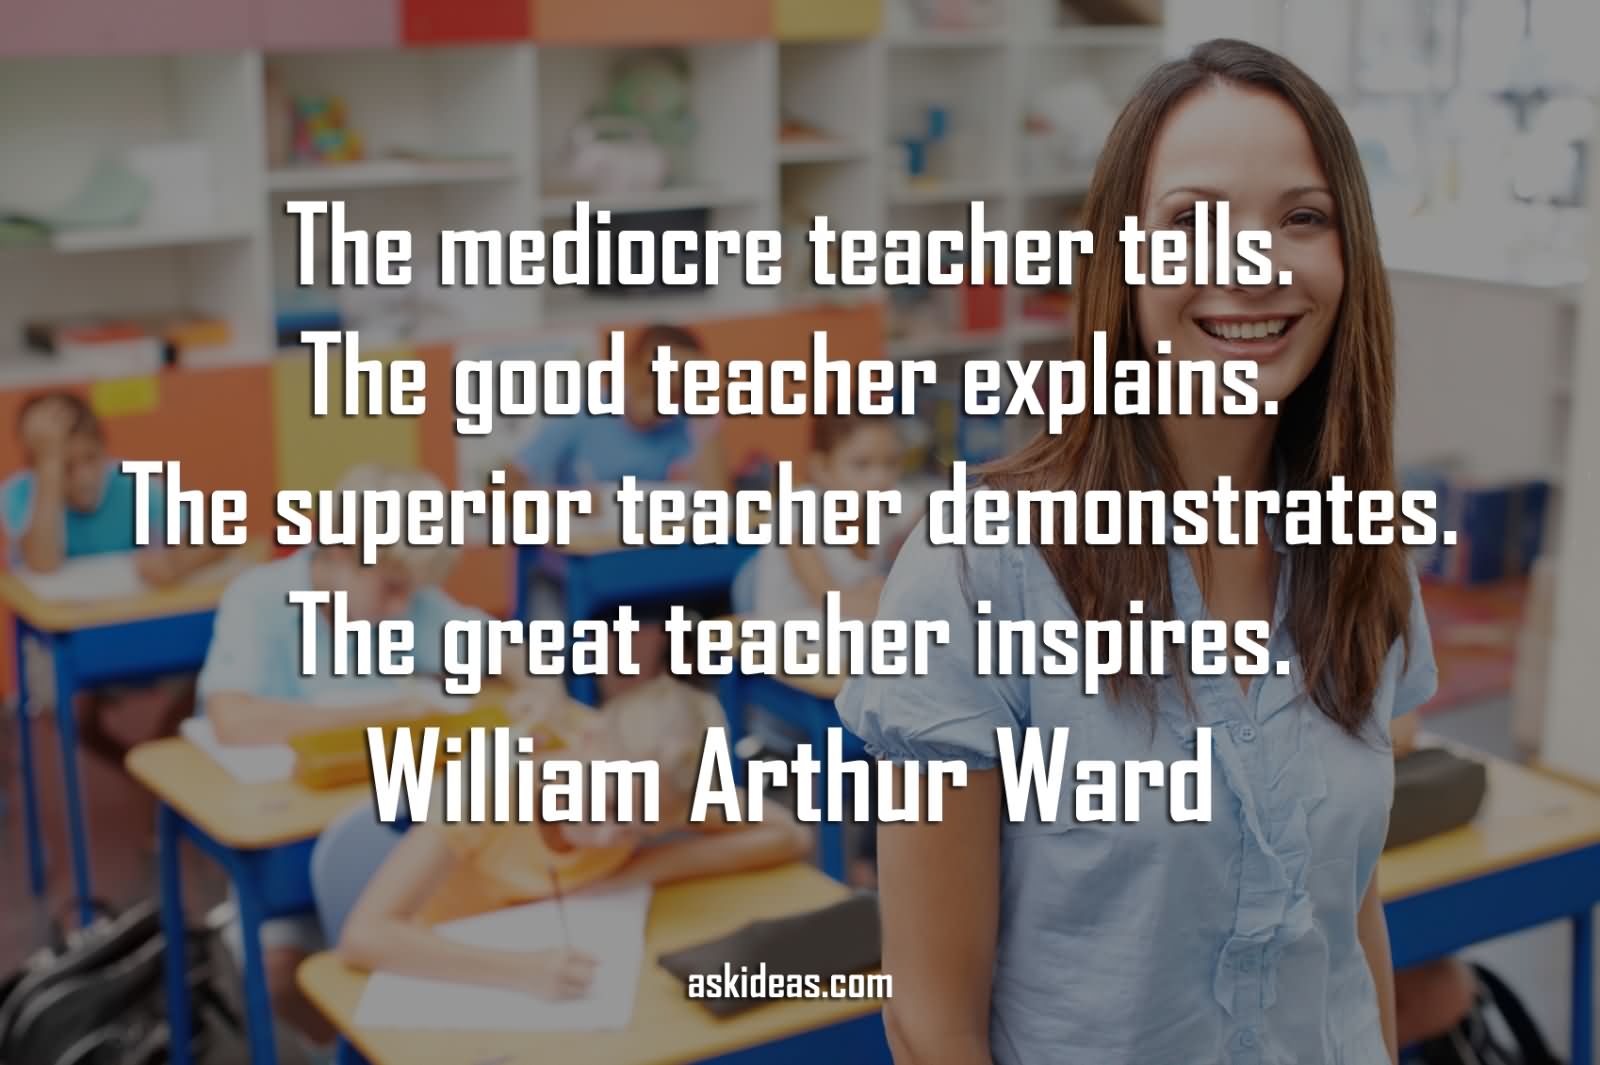 The mediocre teacher tells. The good teacher explains. The superior teacher demonstrates. The great teacher inspires.